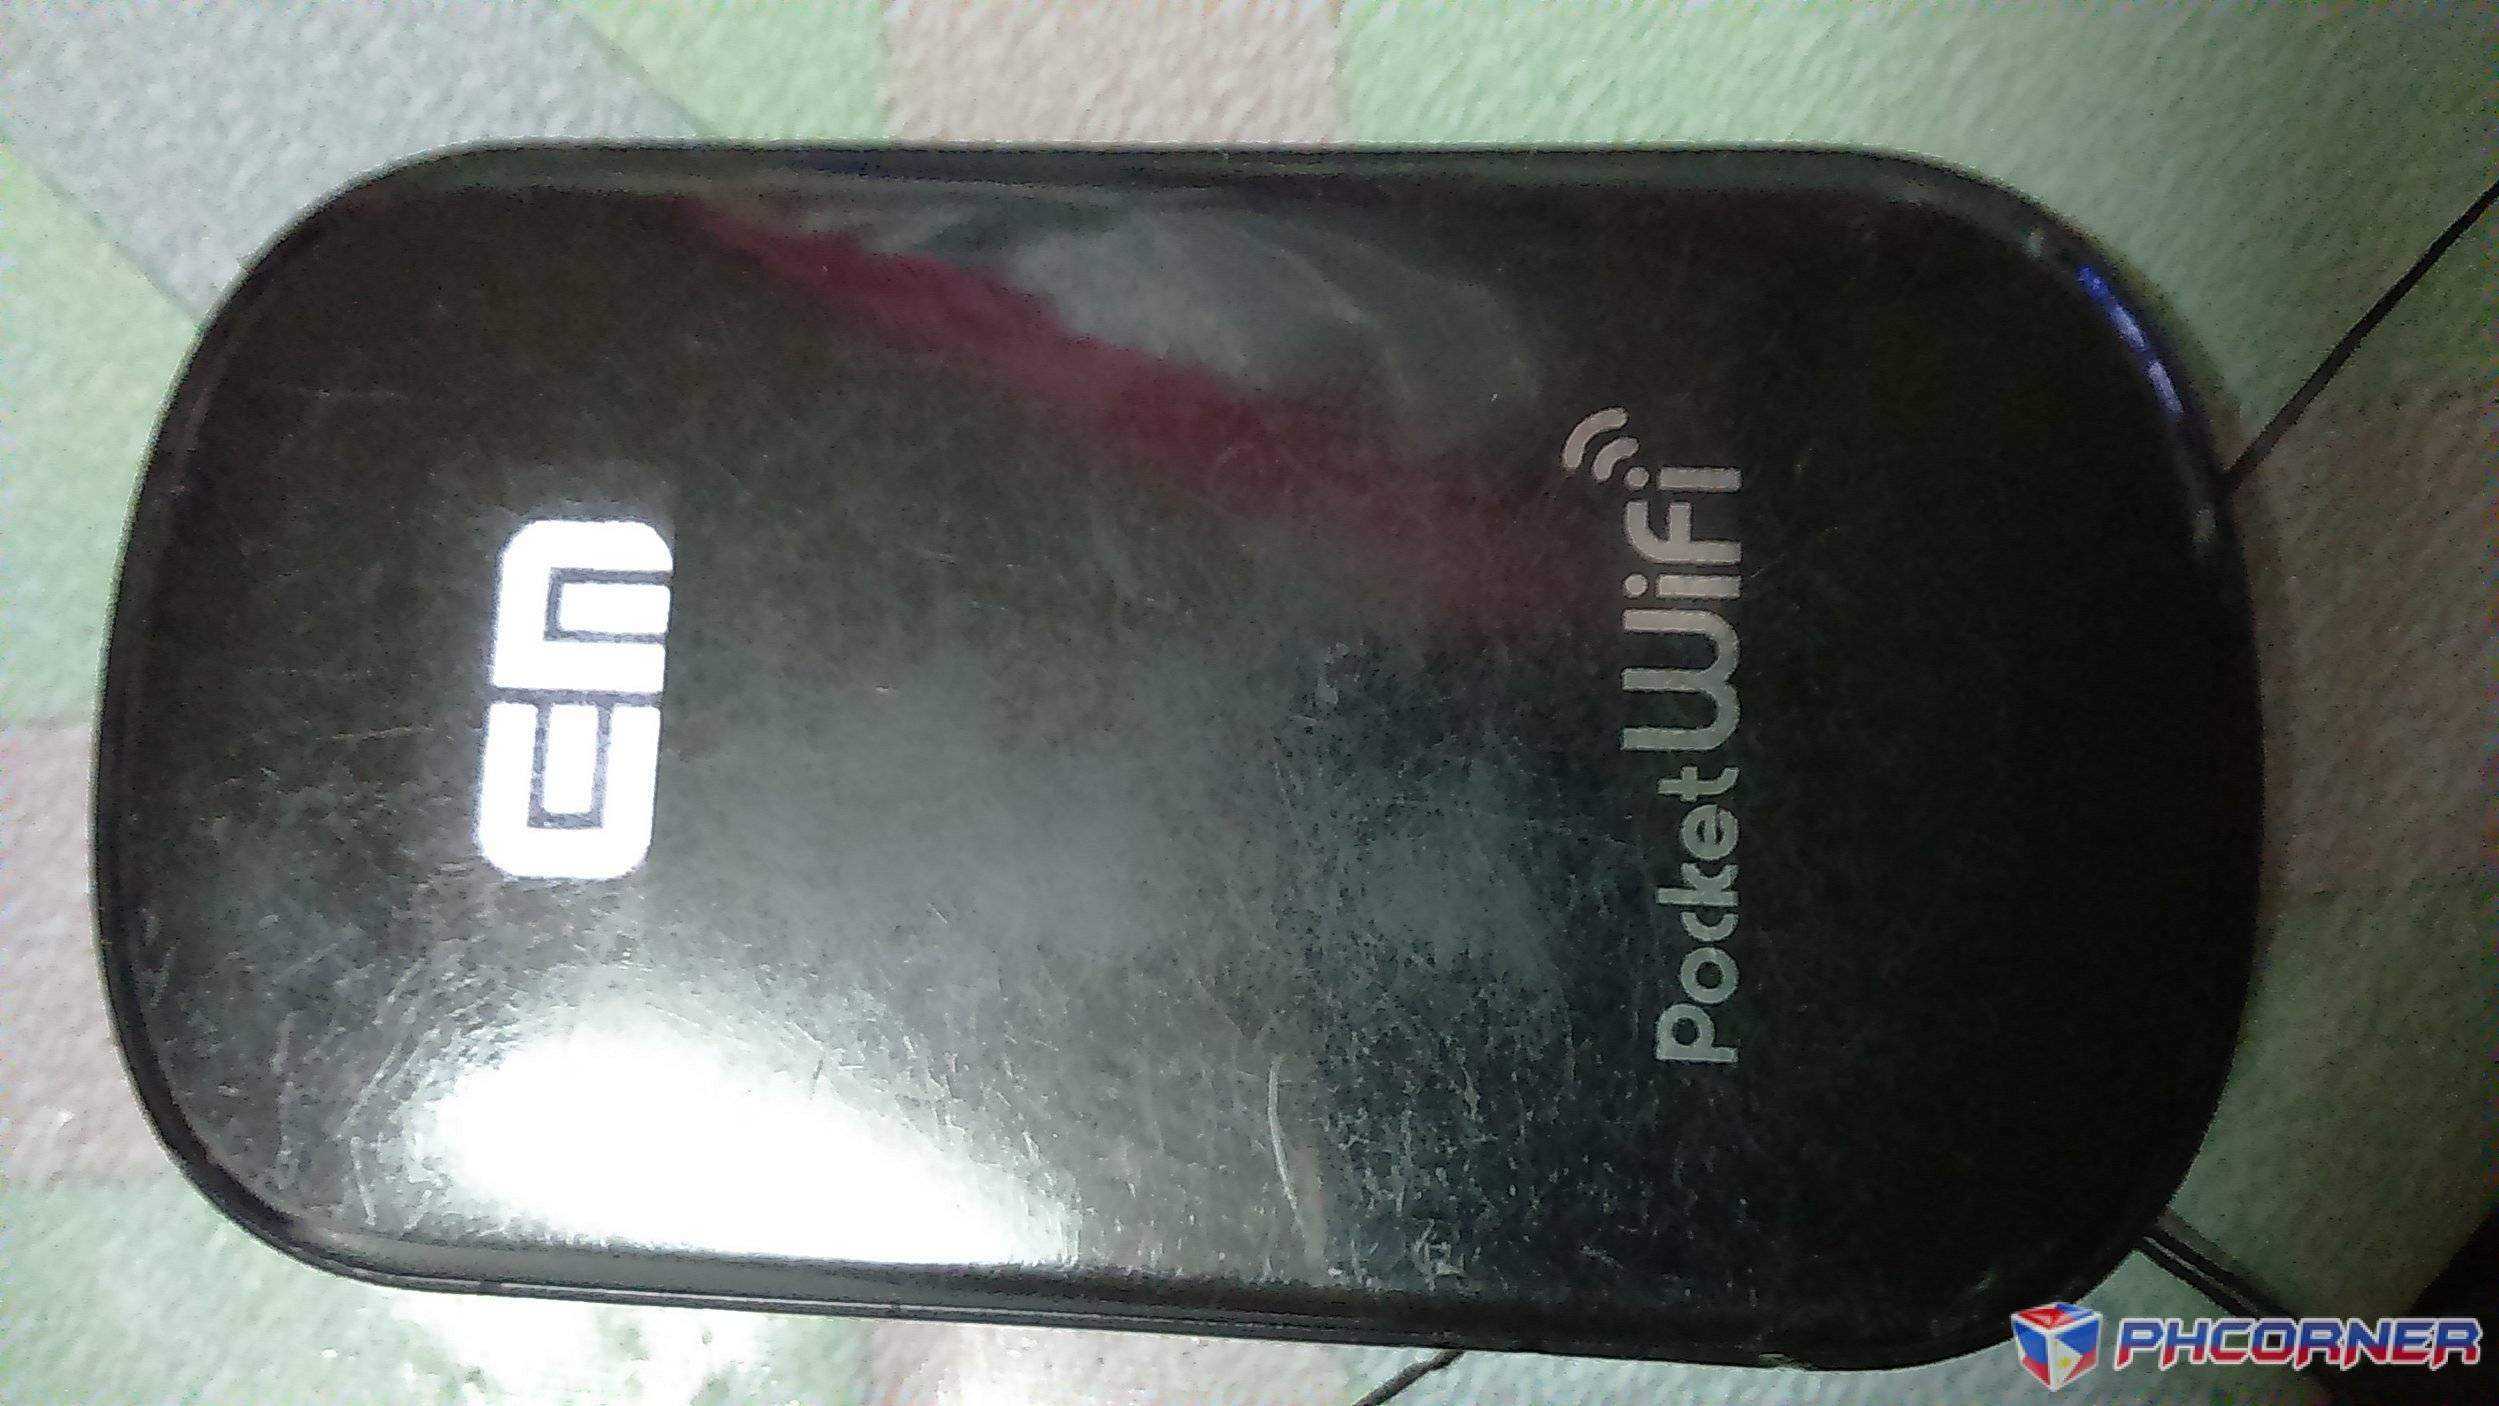 Huawei pocket wifi